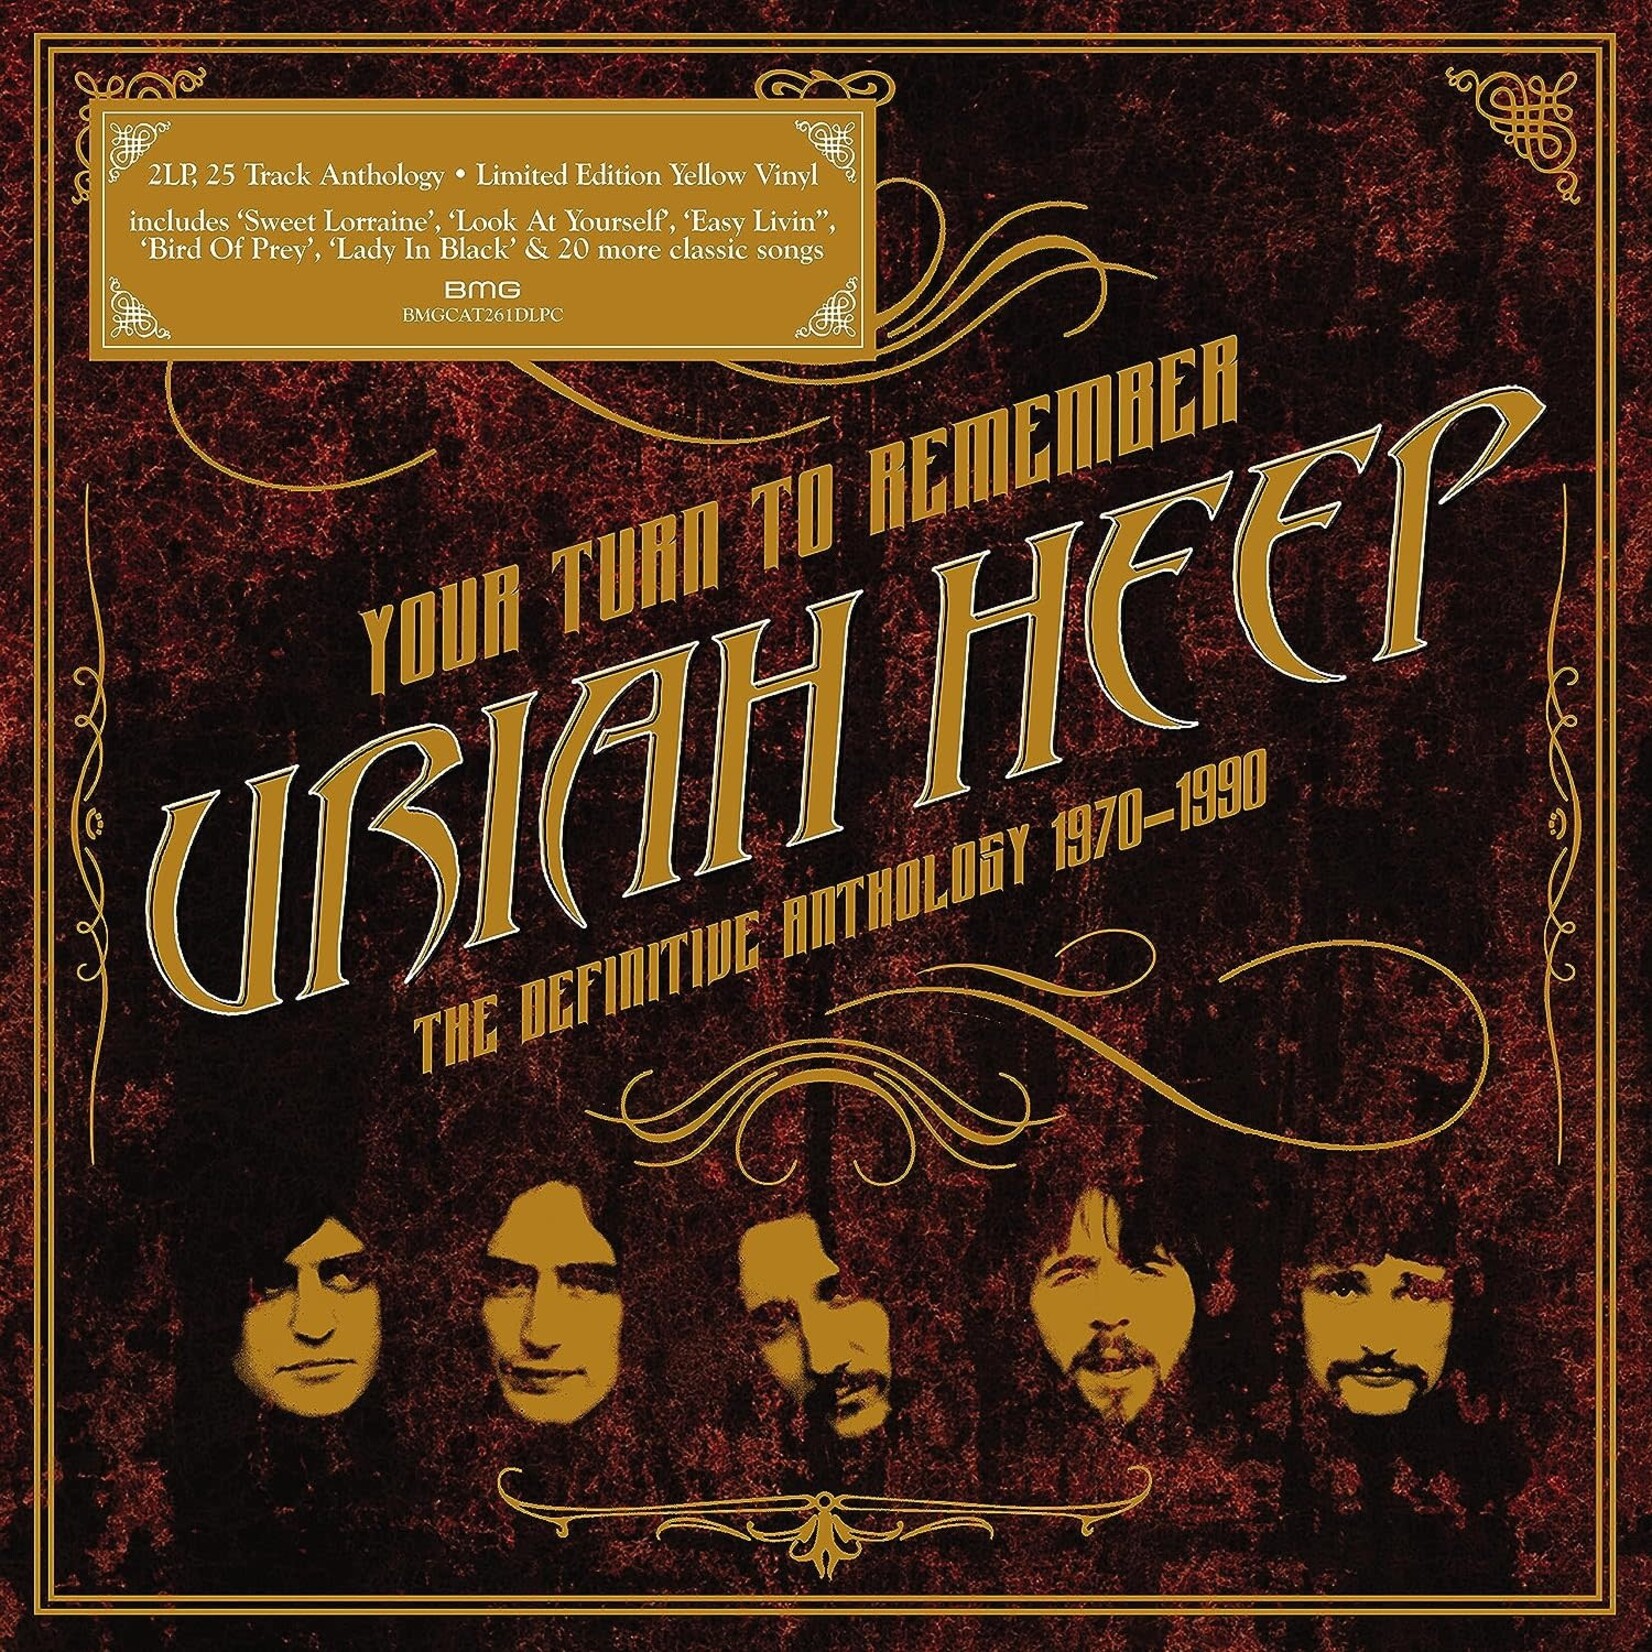 Uriah Heep - The Definitive Anthology 1970-1990 (Yellow Vinyl) [2LP]